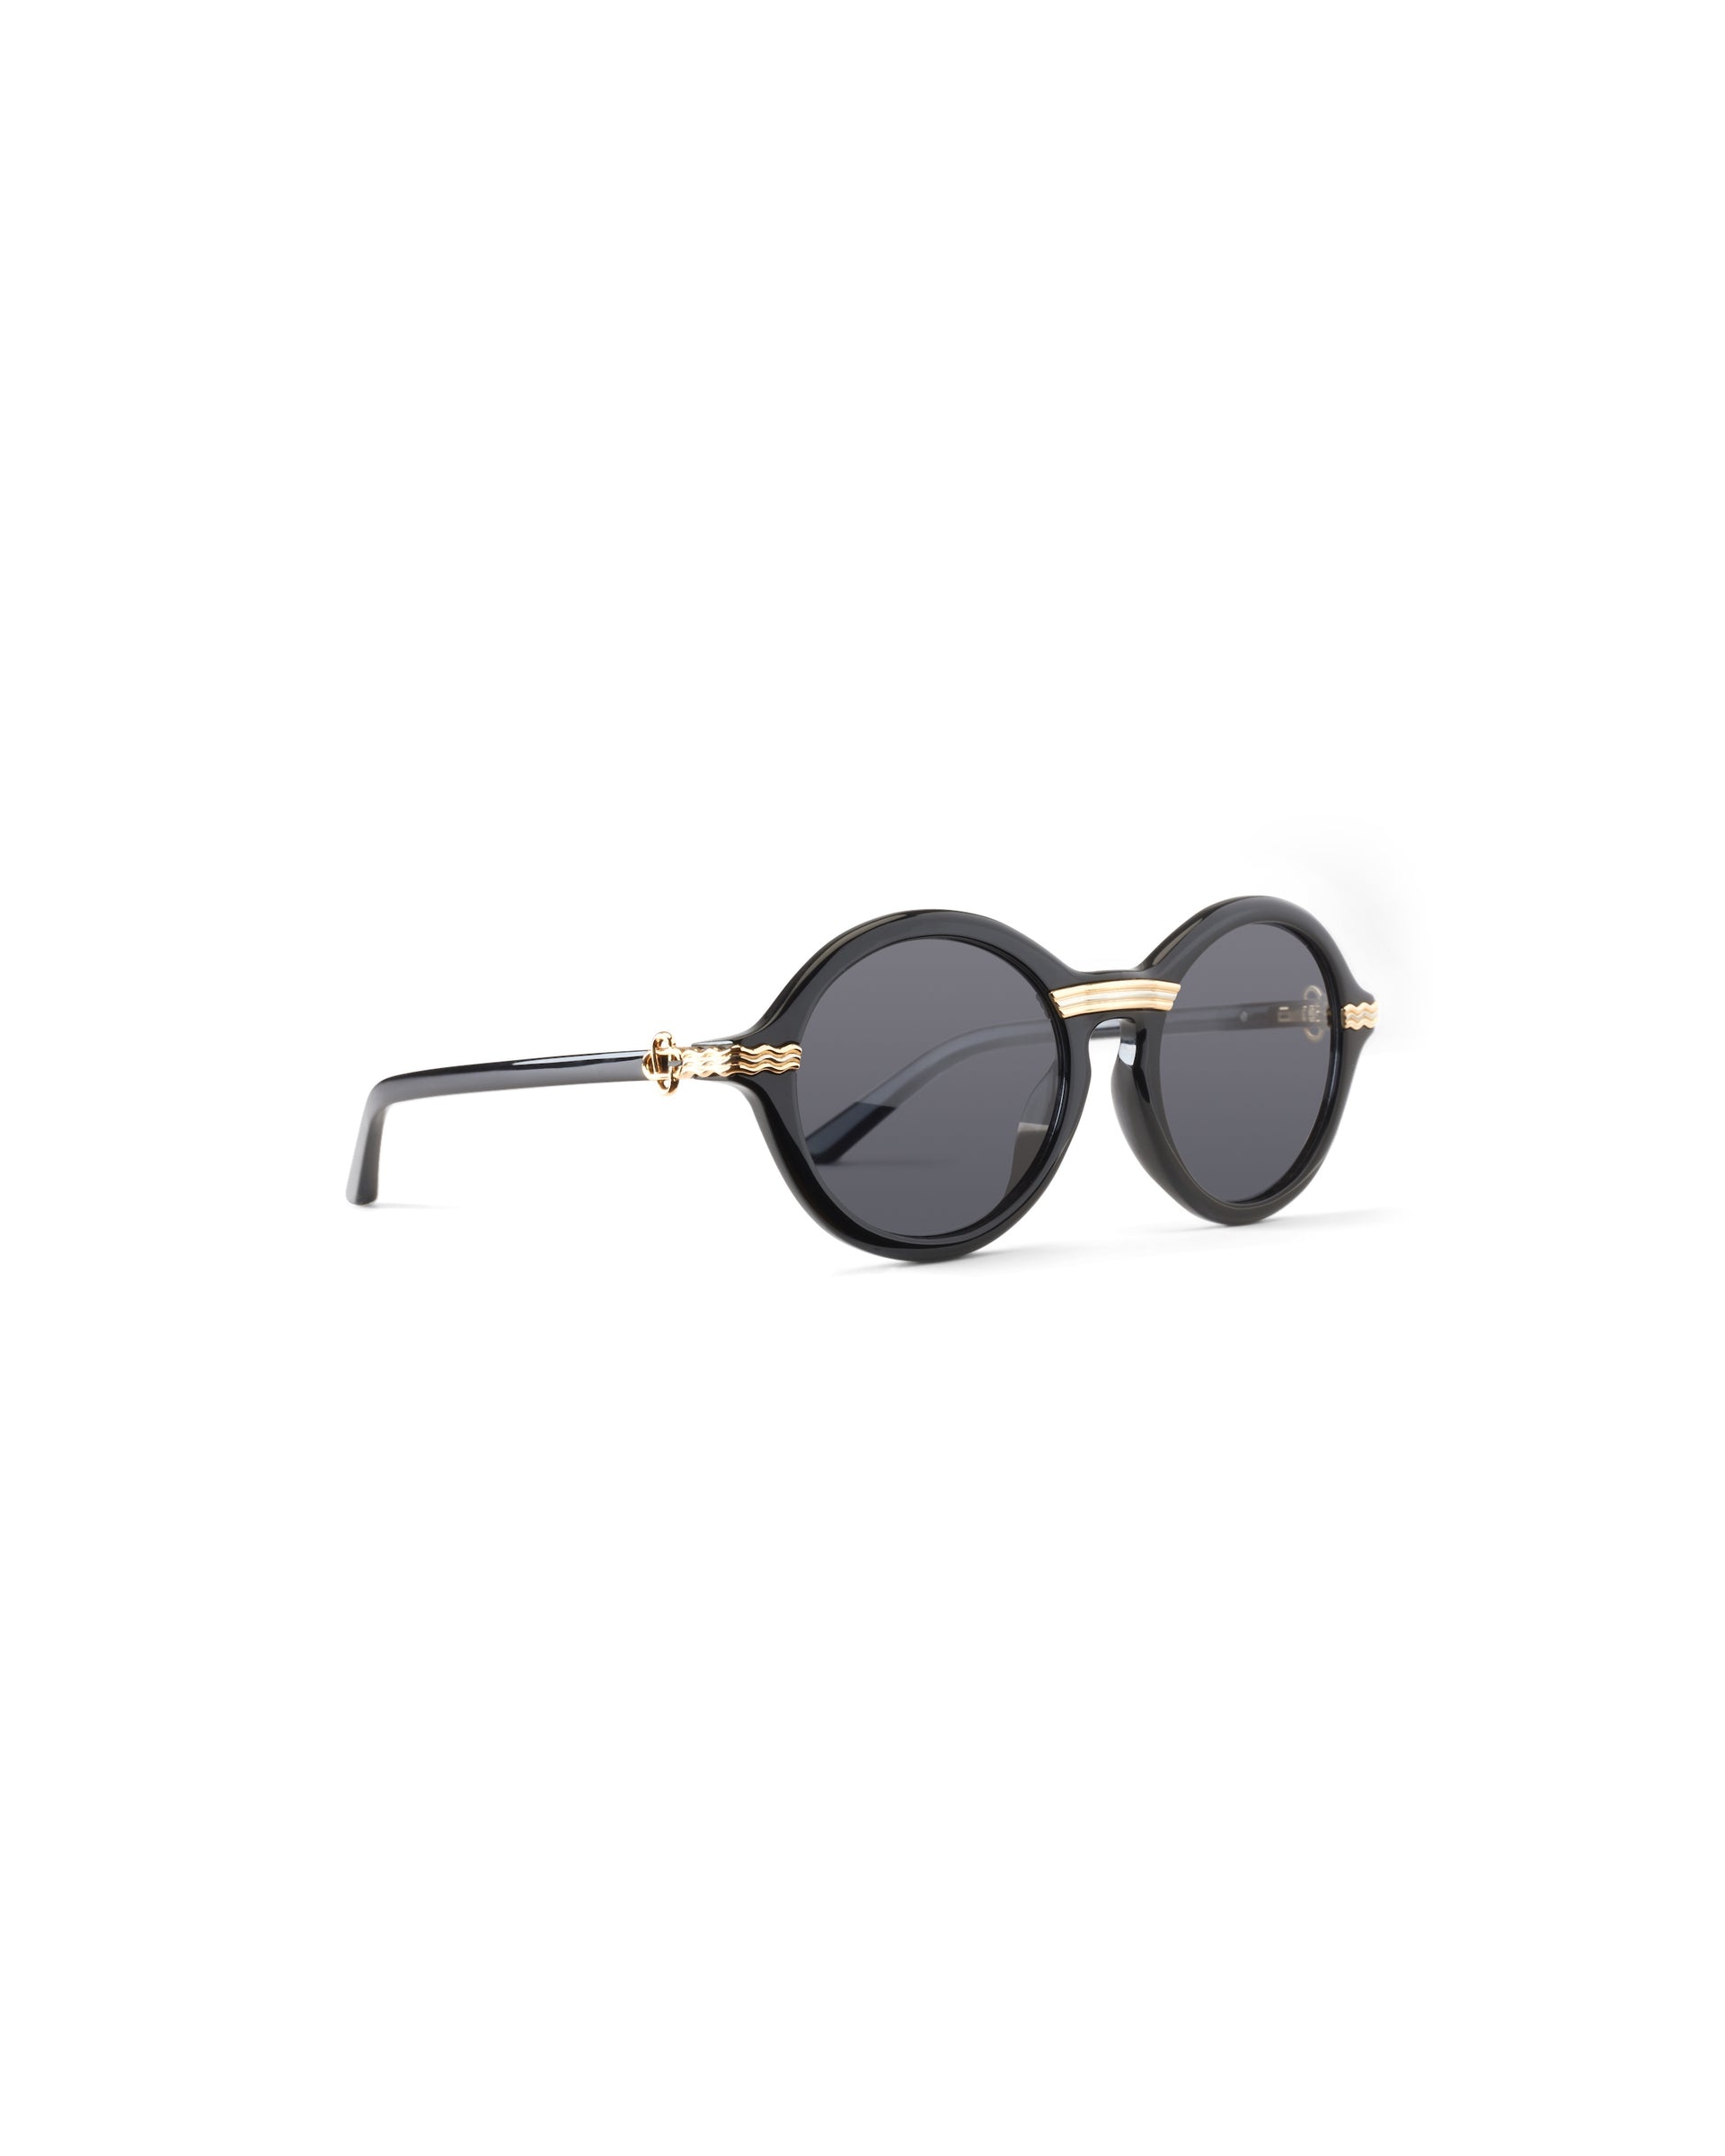 Tajer Black & Gold Sunglasses - 1